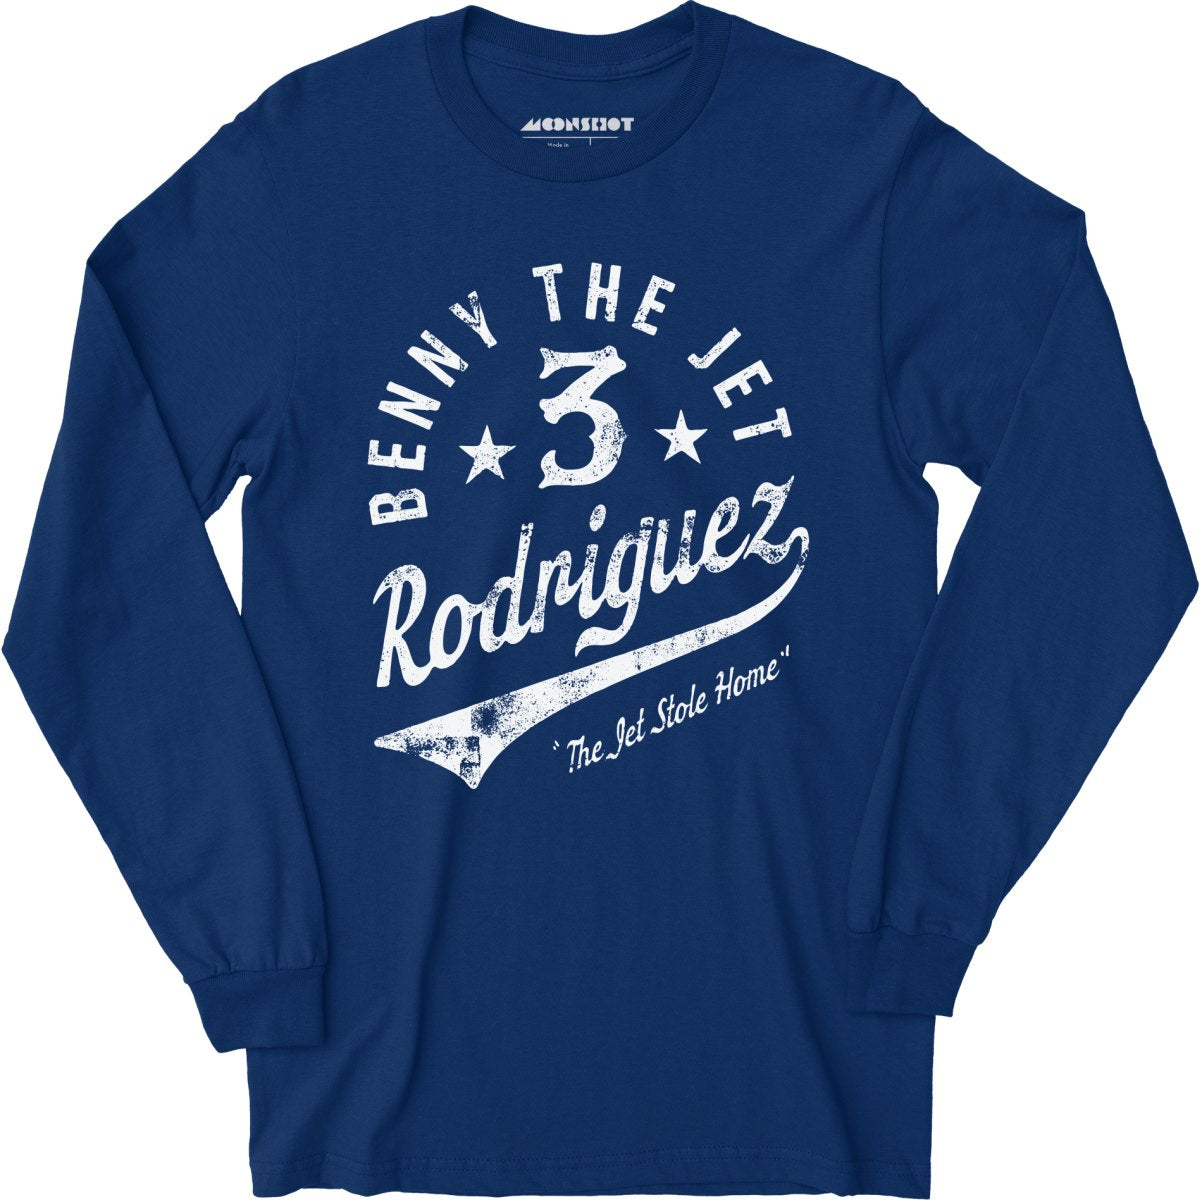 Benny the Jet Rodriguez - Long Sleeve T-Shirt